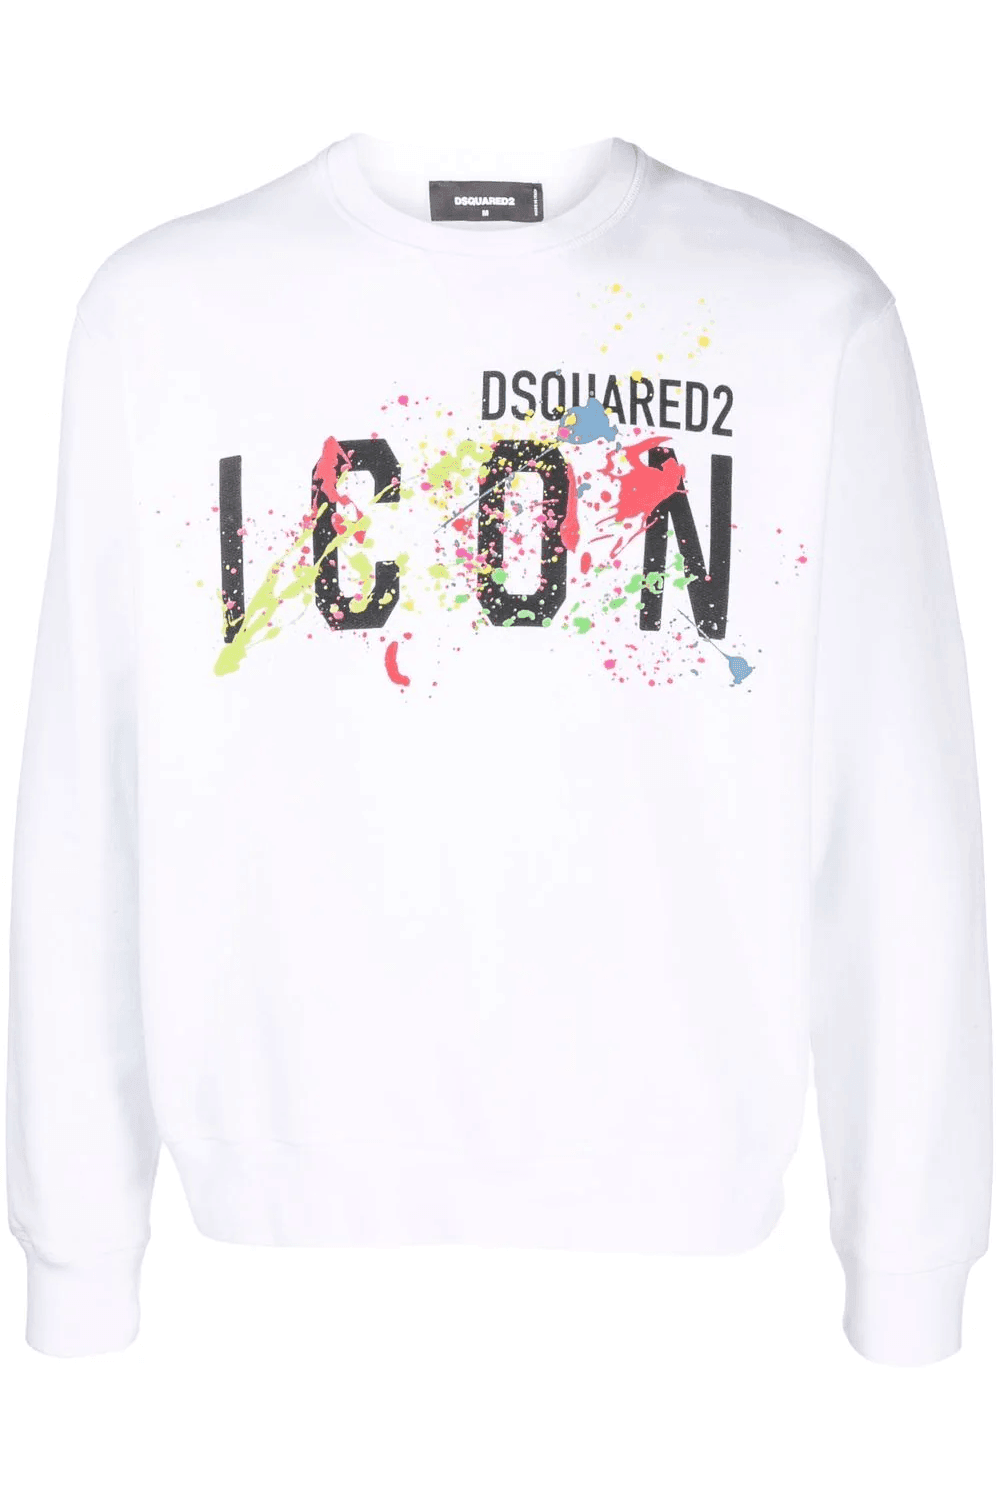 DSquared2 Icon Splatter Sweatshirt White - Urban Menswear